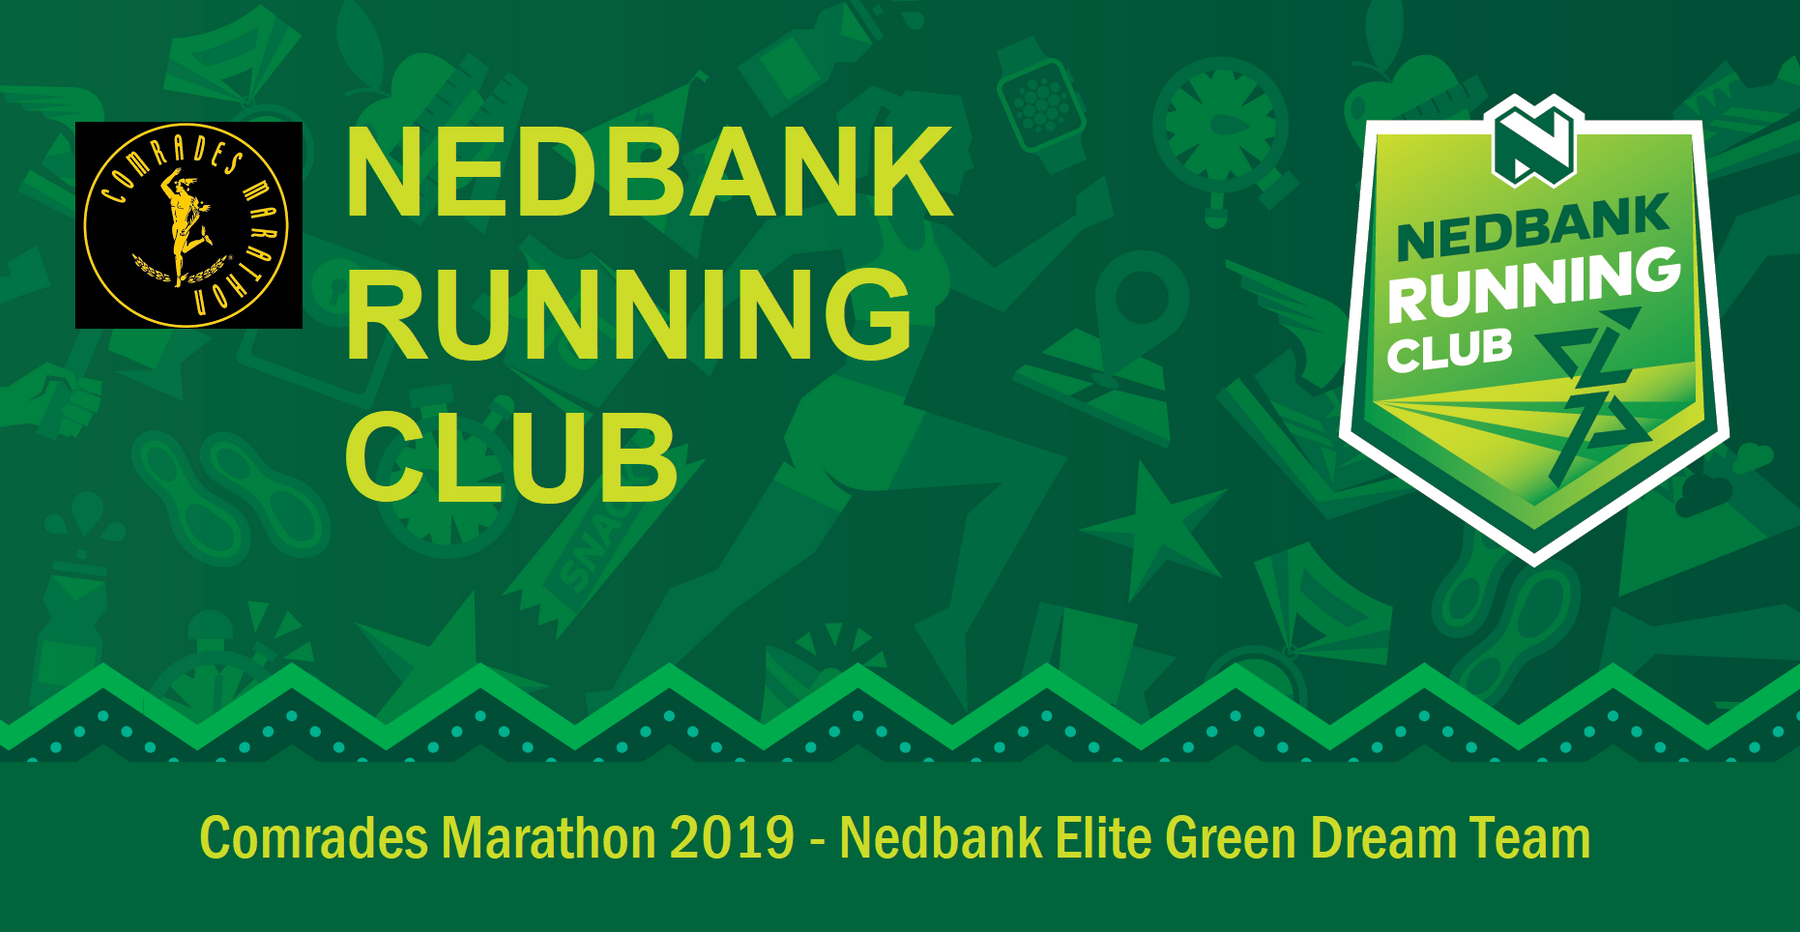 Comrades Marathon 2019 - Nedbank Elite Green Dream Team